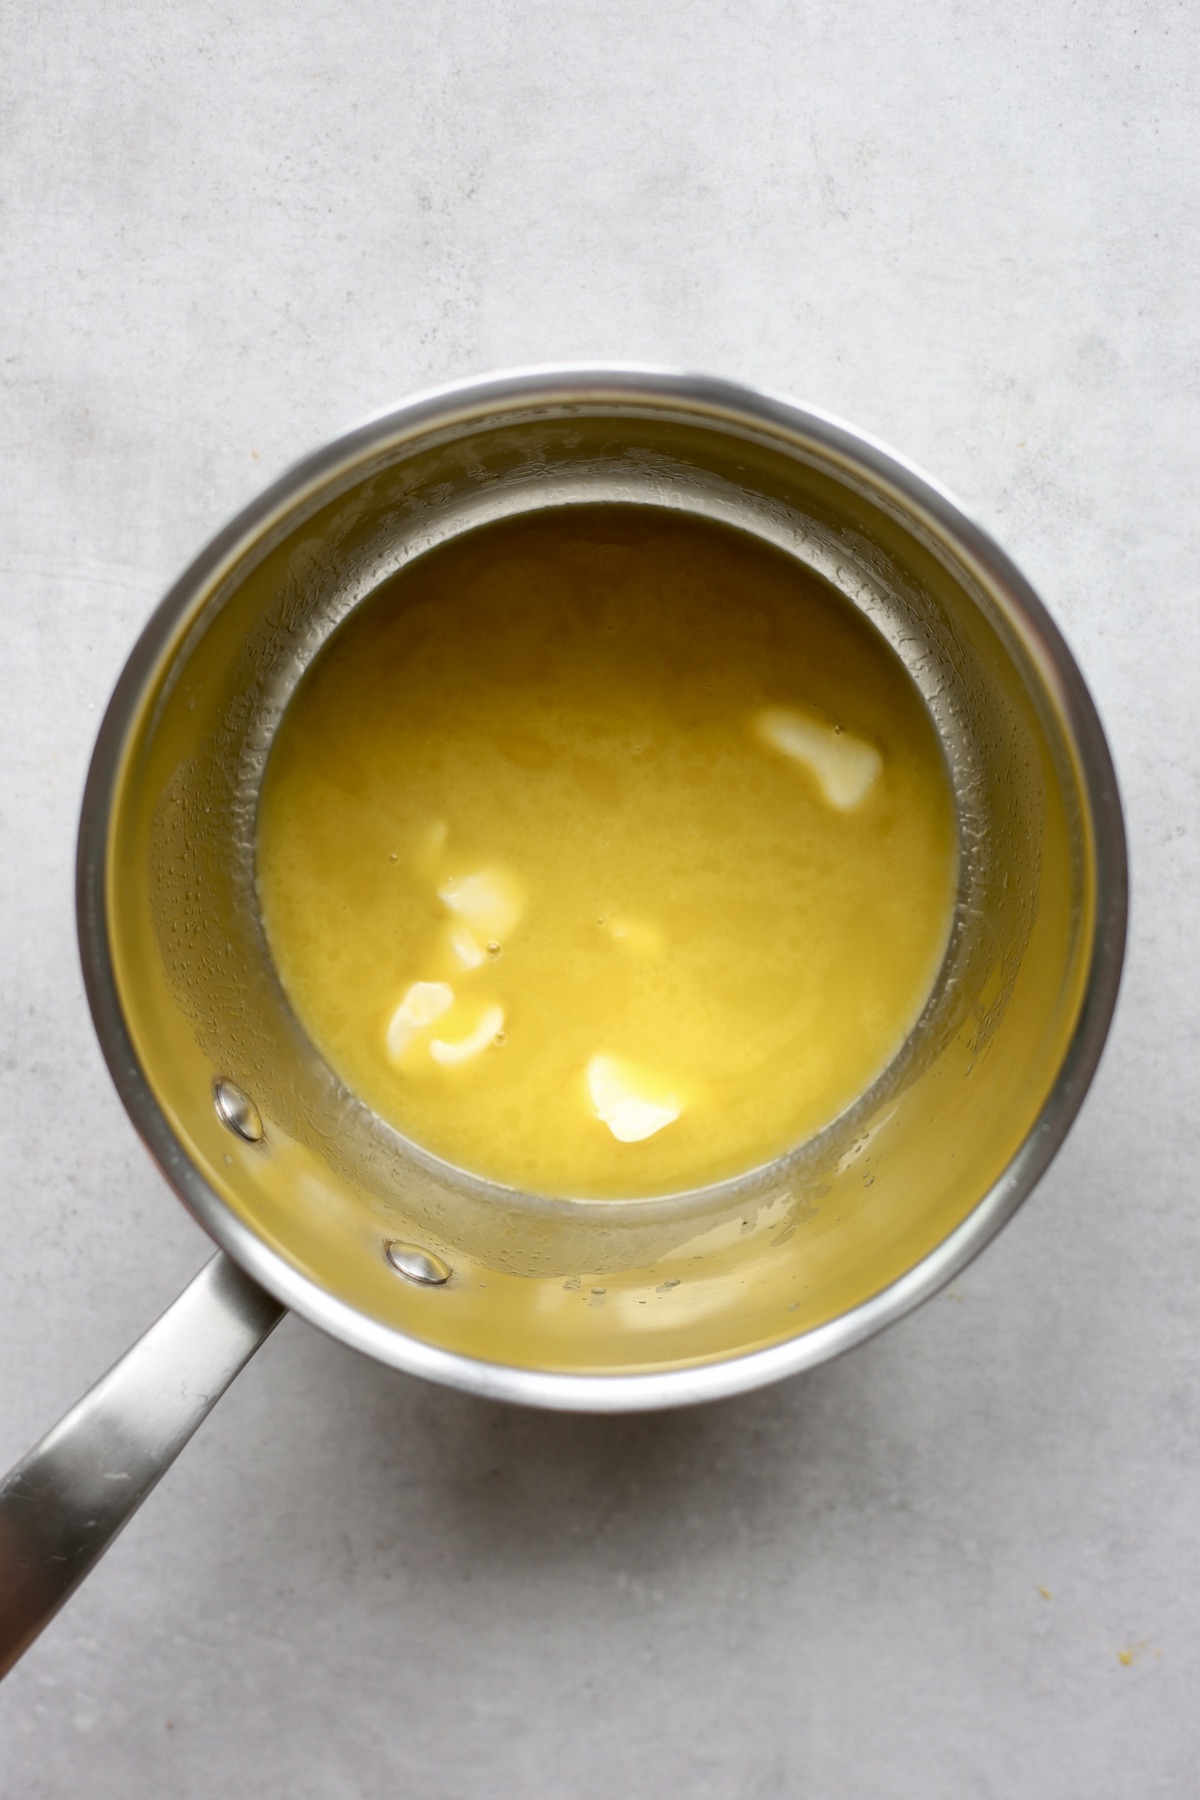 Vegan butter melting in a silver saucpan.